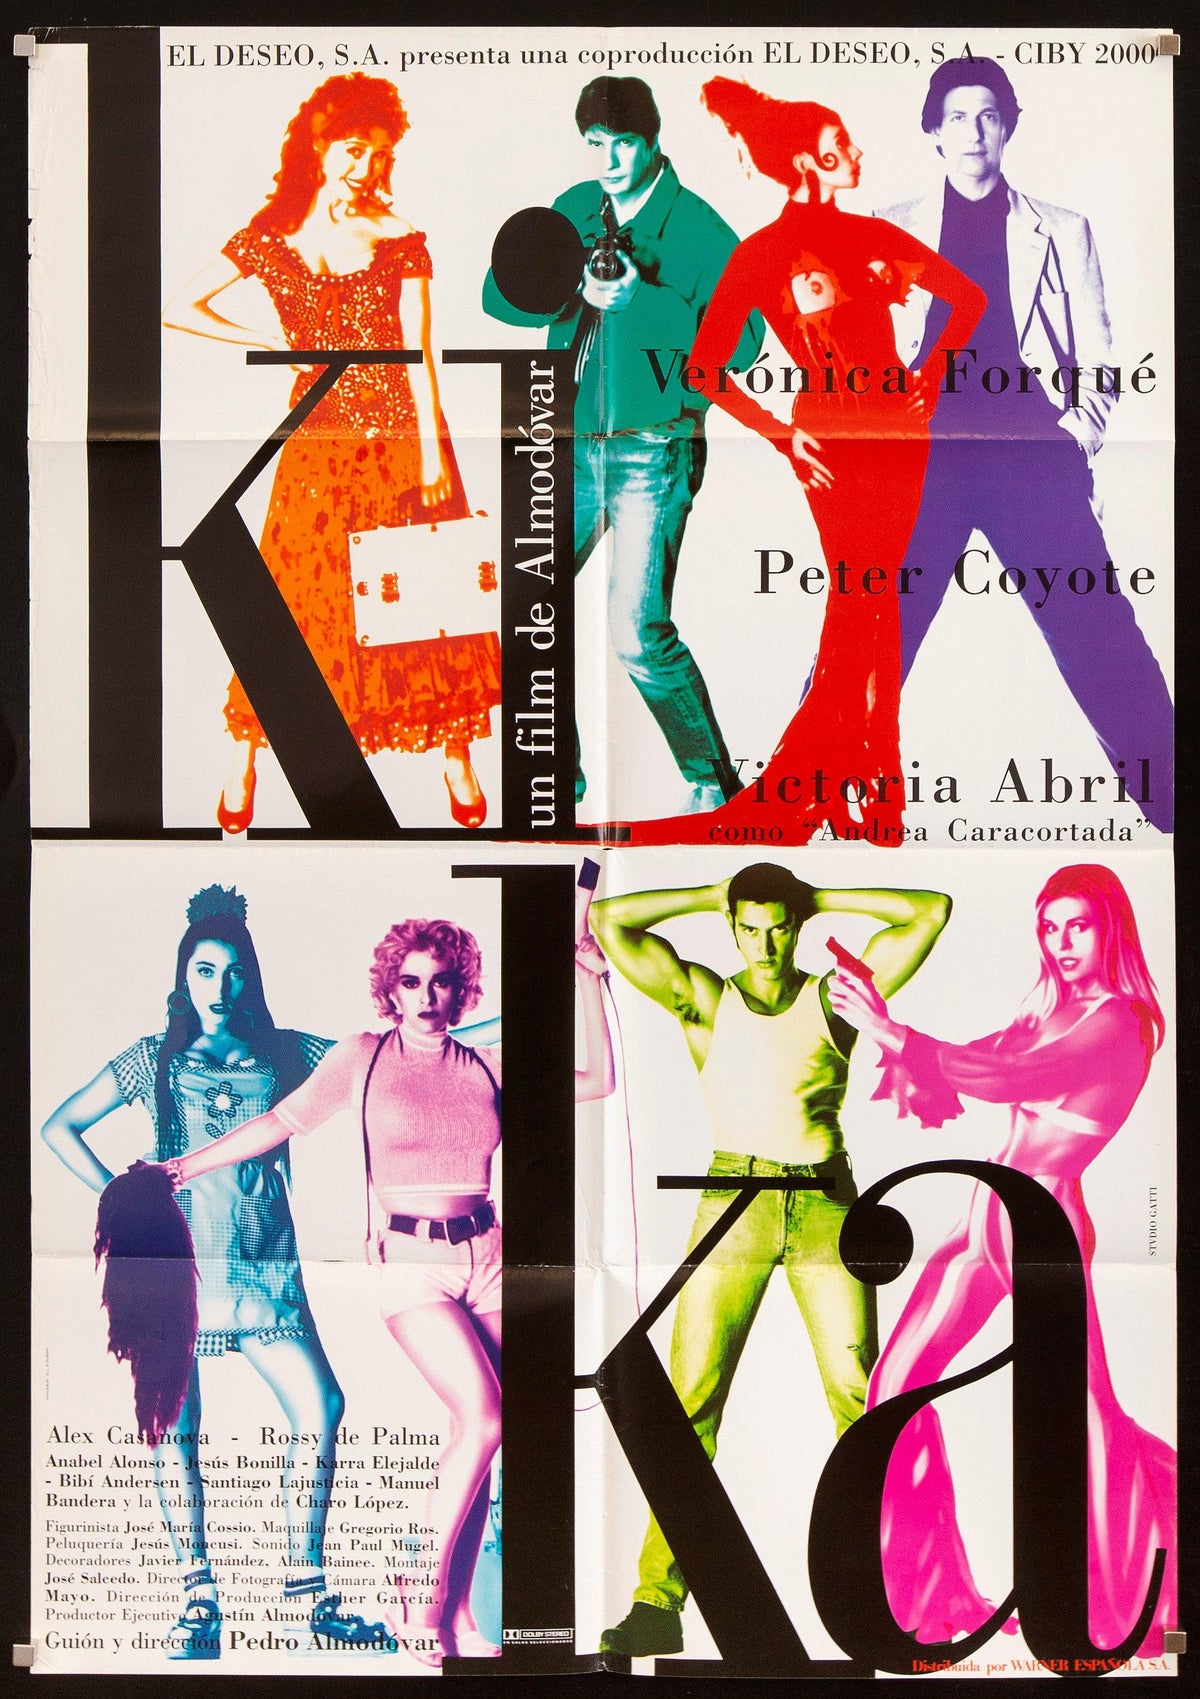 Kika 1 Sheet (27x41) Original Vintage Movie Poster